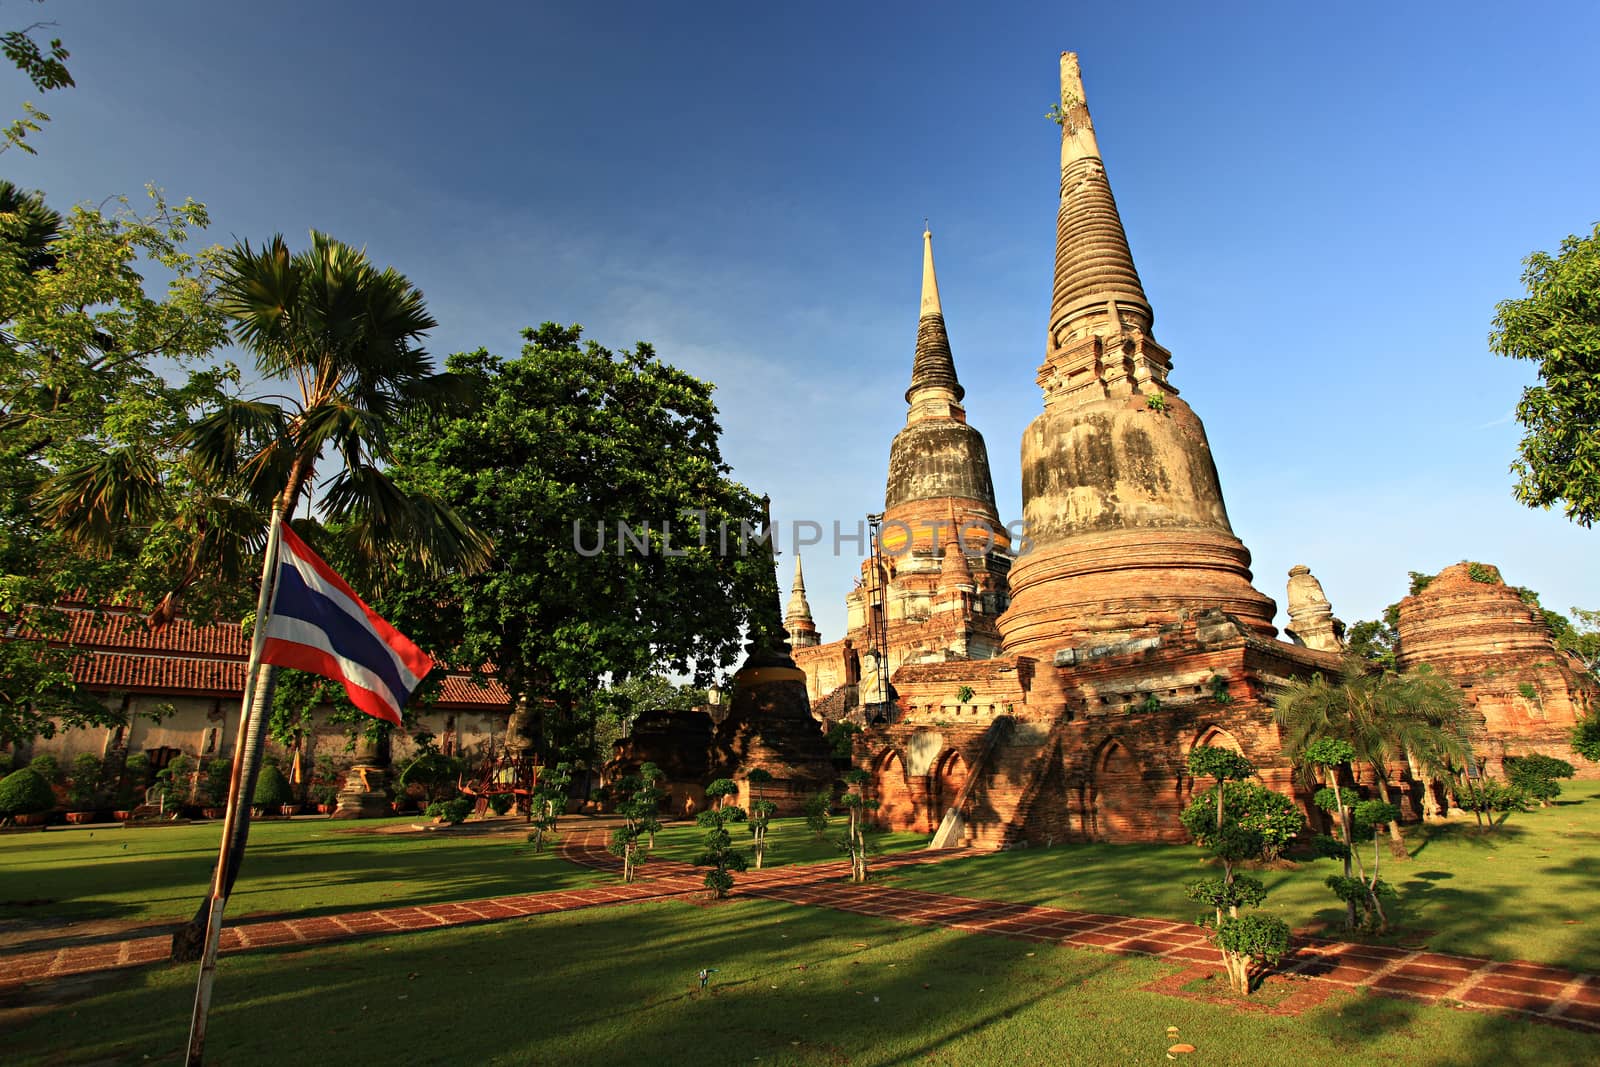 Phra Chedi Chaimongkhon, an ancient chedi pagoda at Wat Yai Chai Mongkhon Temple by Mercedess